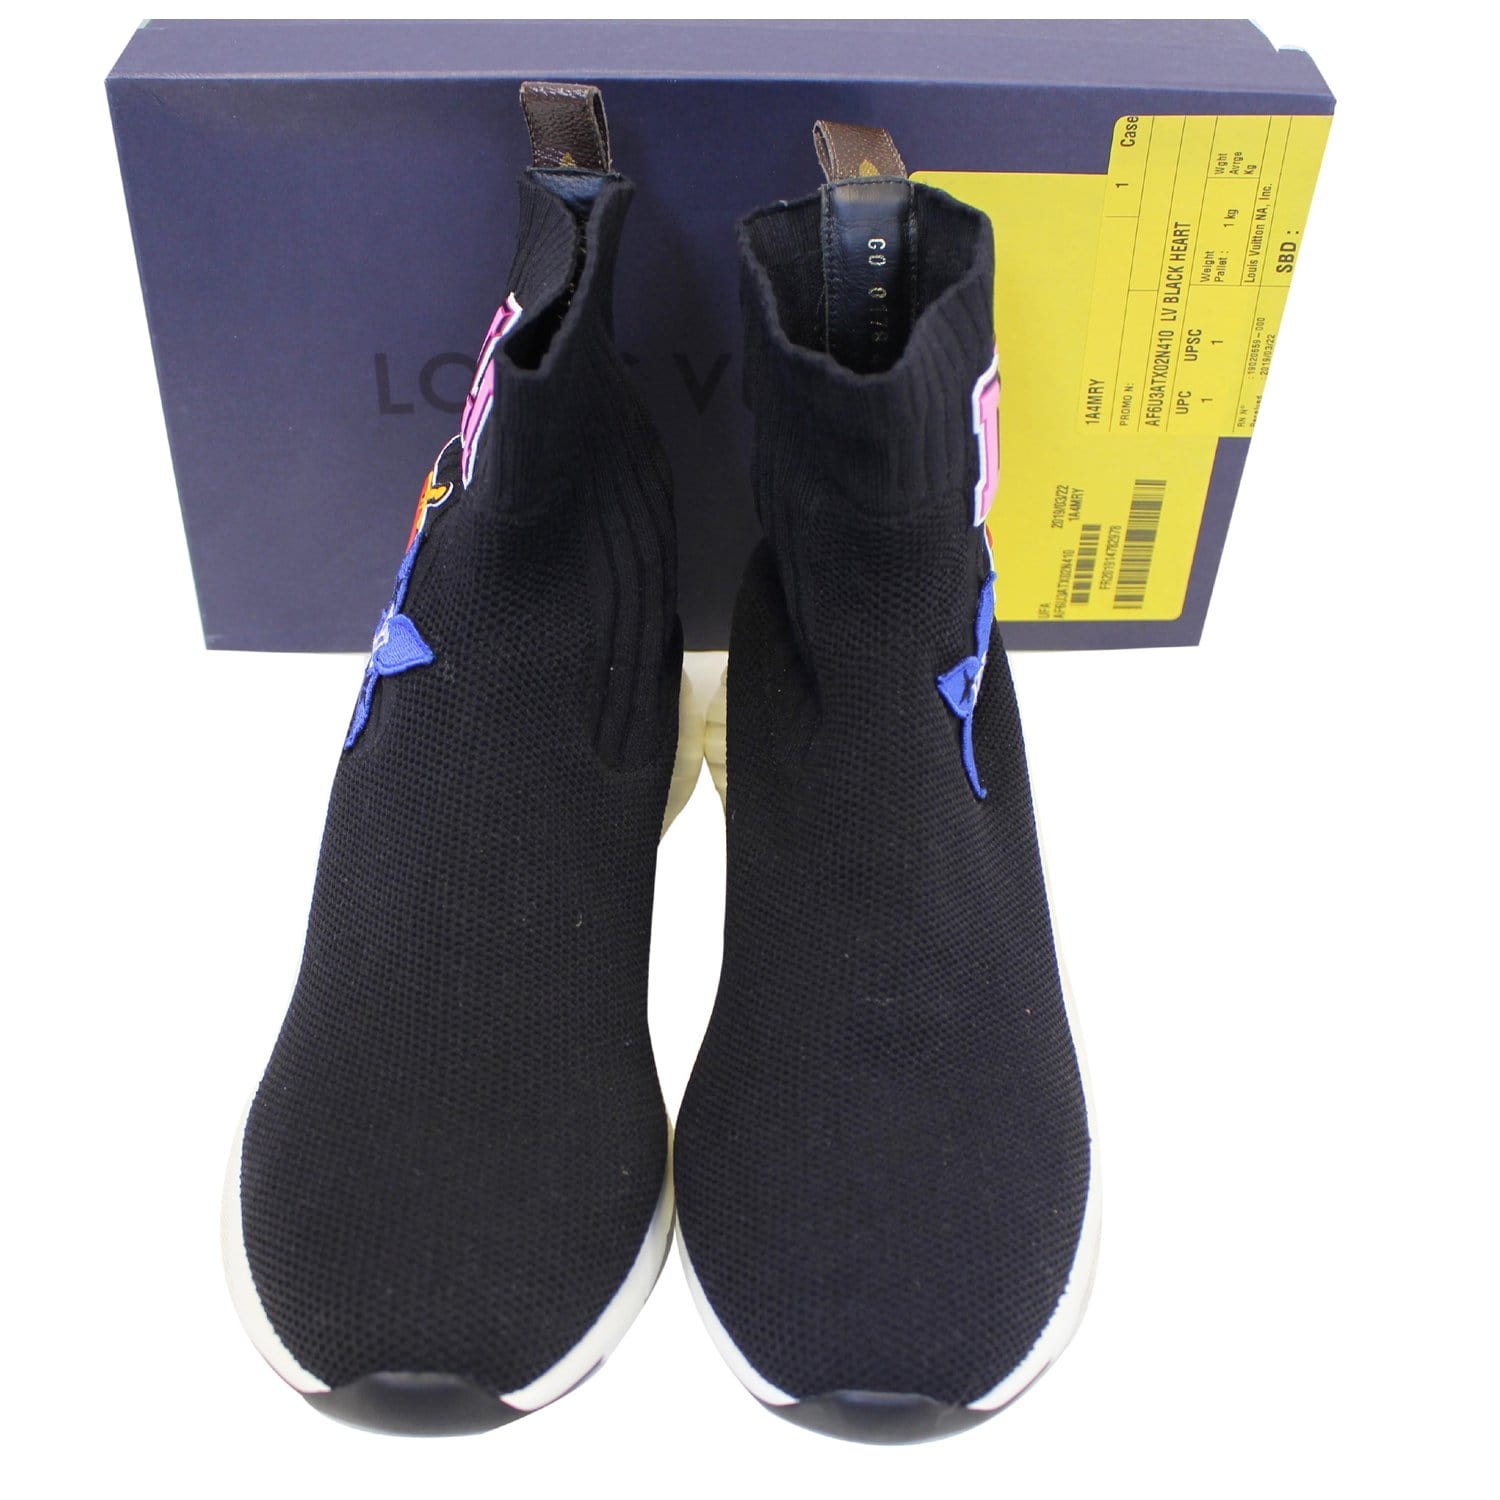 Louis Vuitton Black Knit Fabric Archlight Sock High Top Sneaker